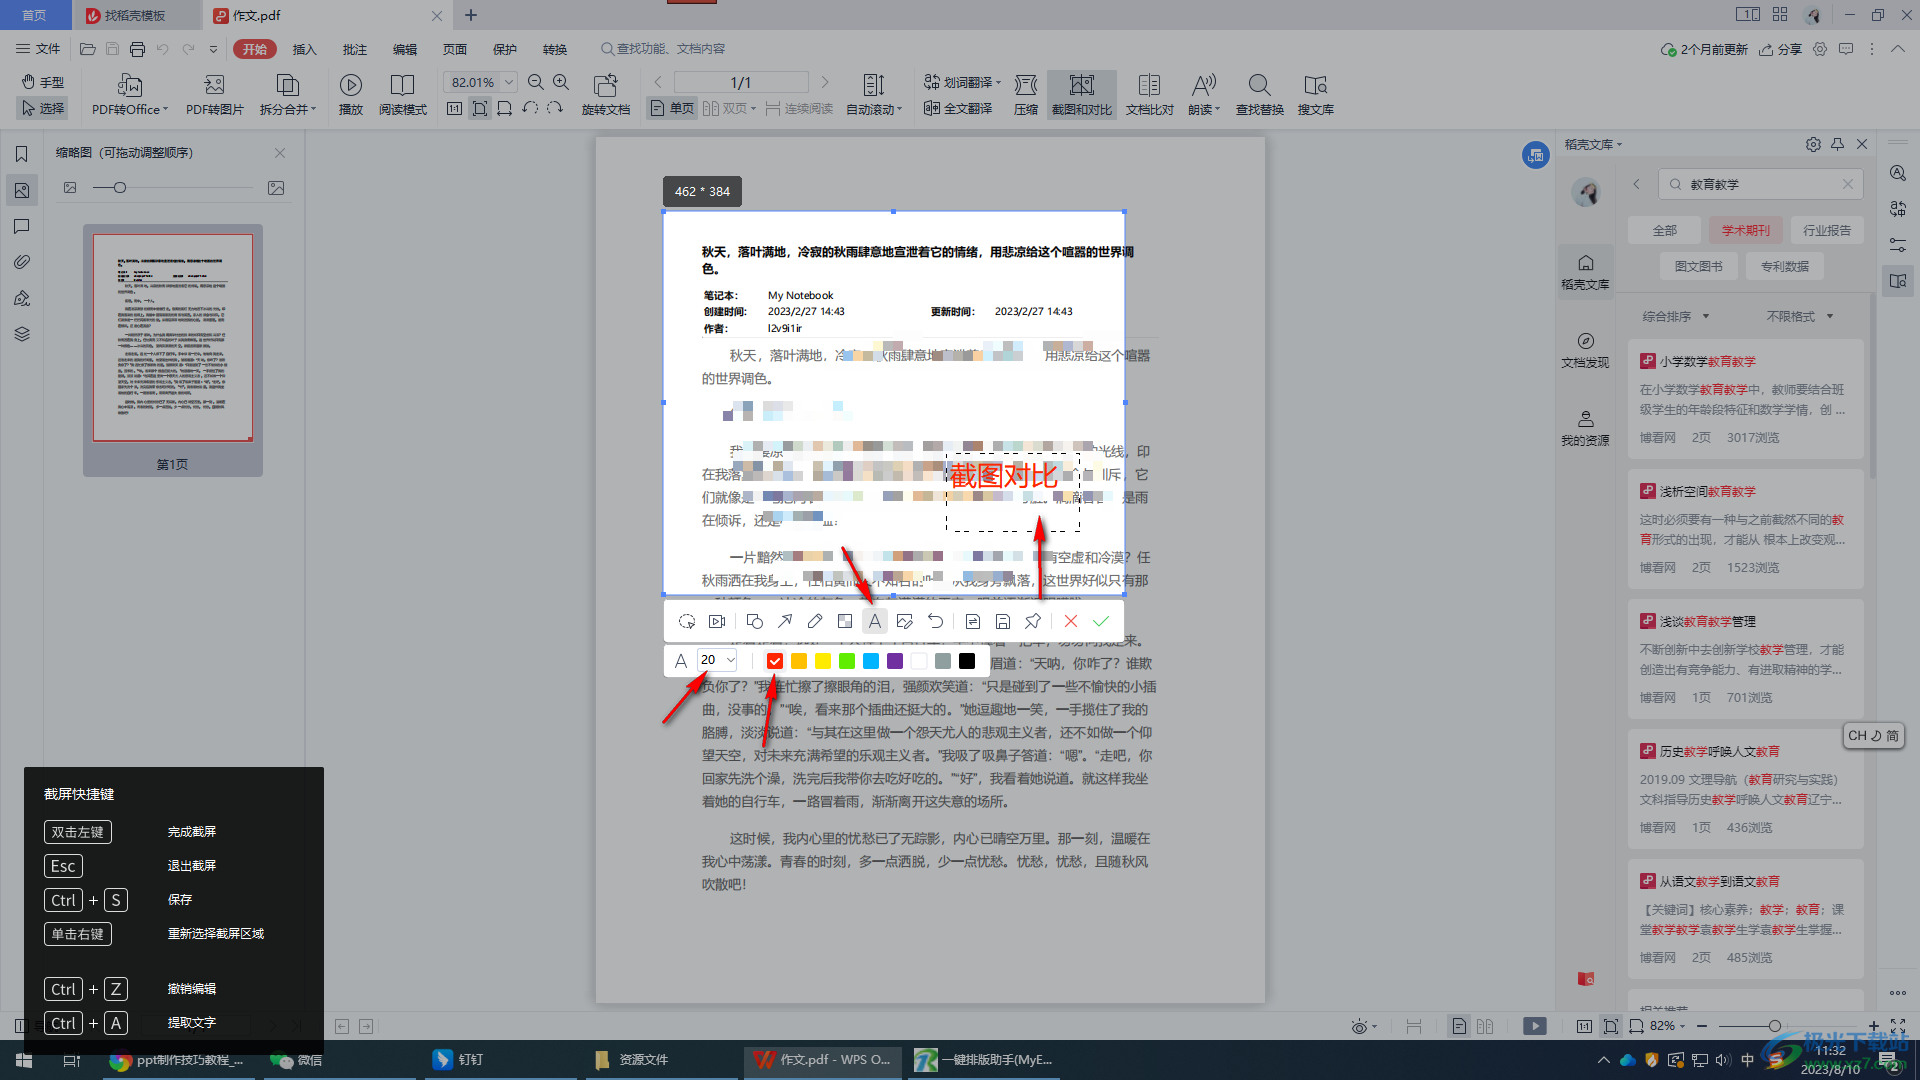 WPS PDF文档中使用截图功能的方法